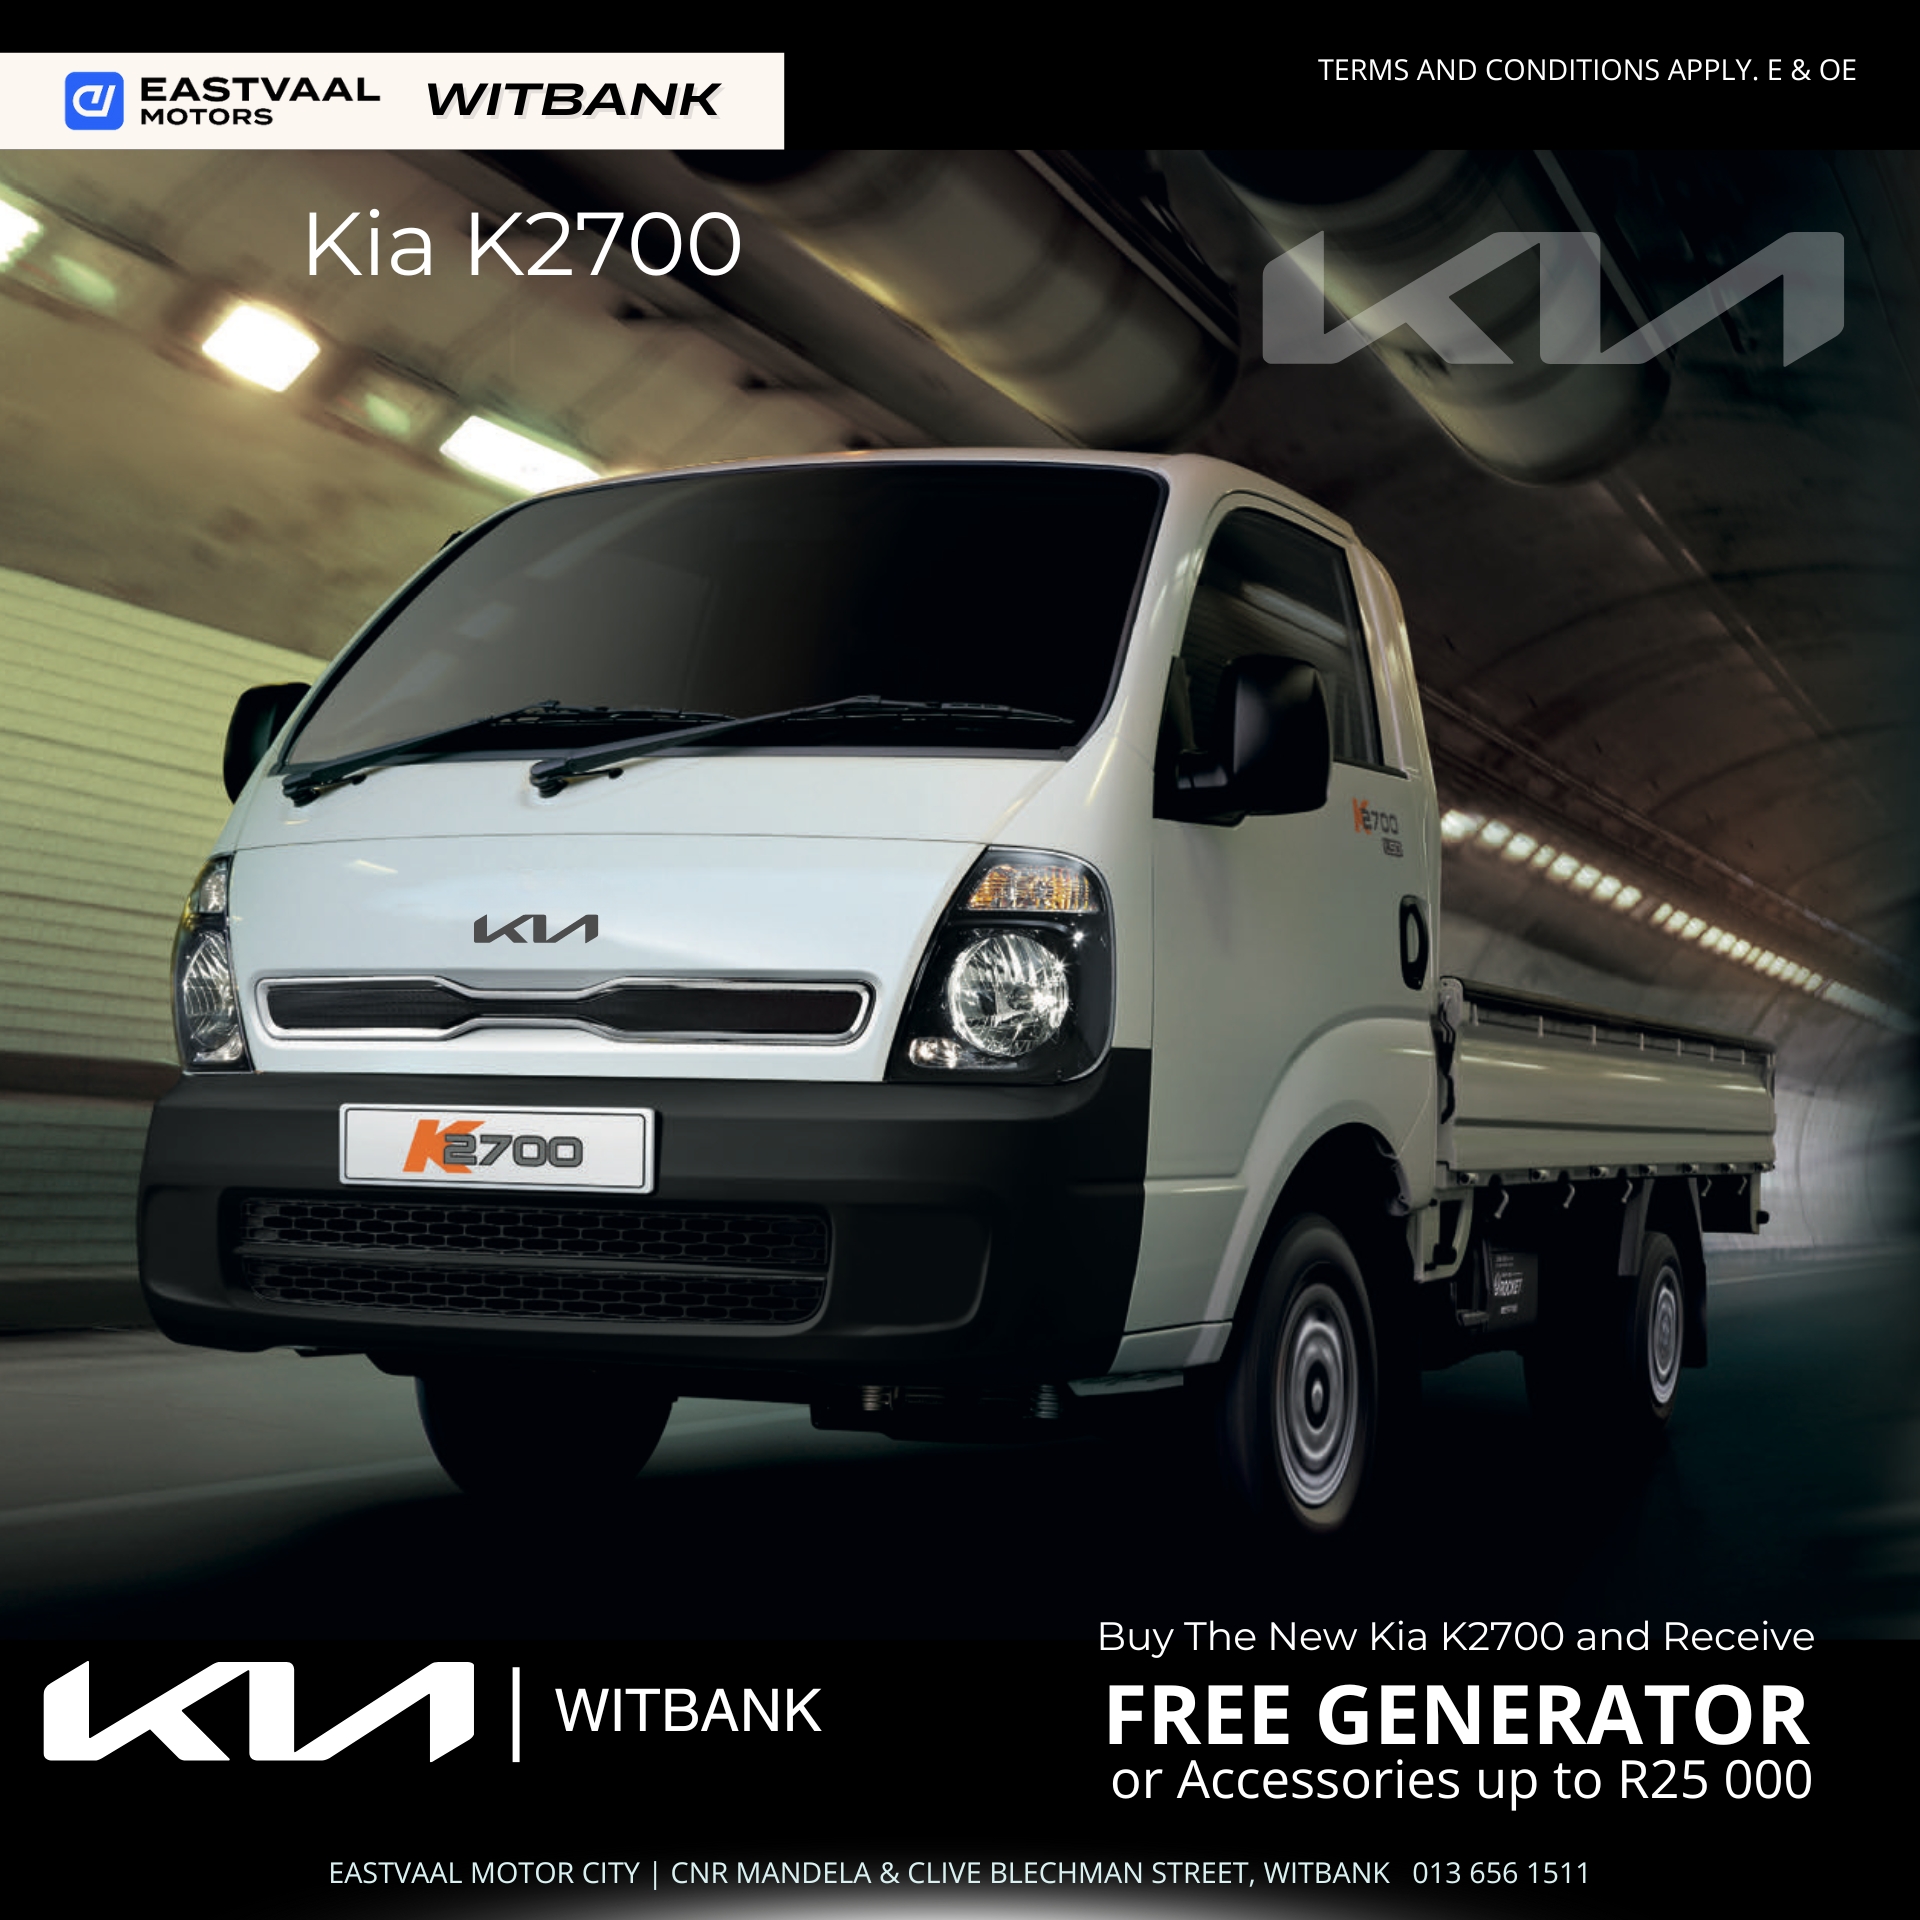 KIA K2700 image from Eastvaal Motors